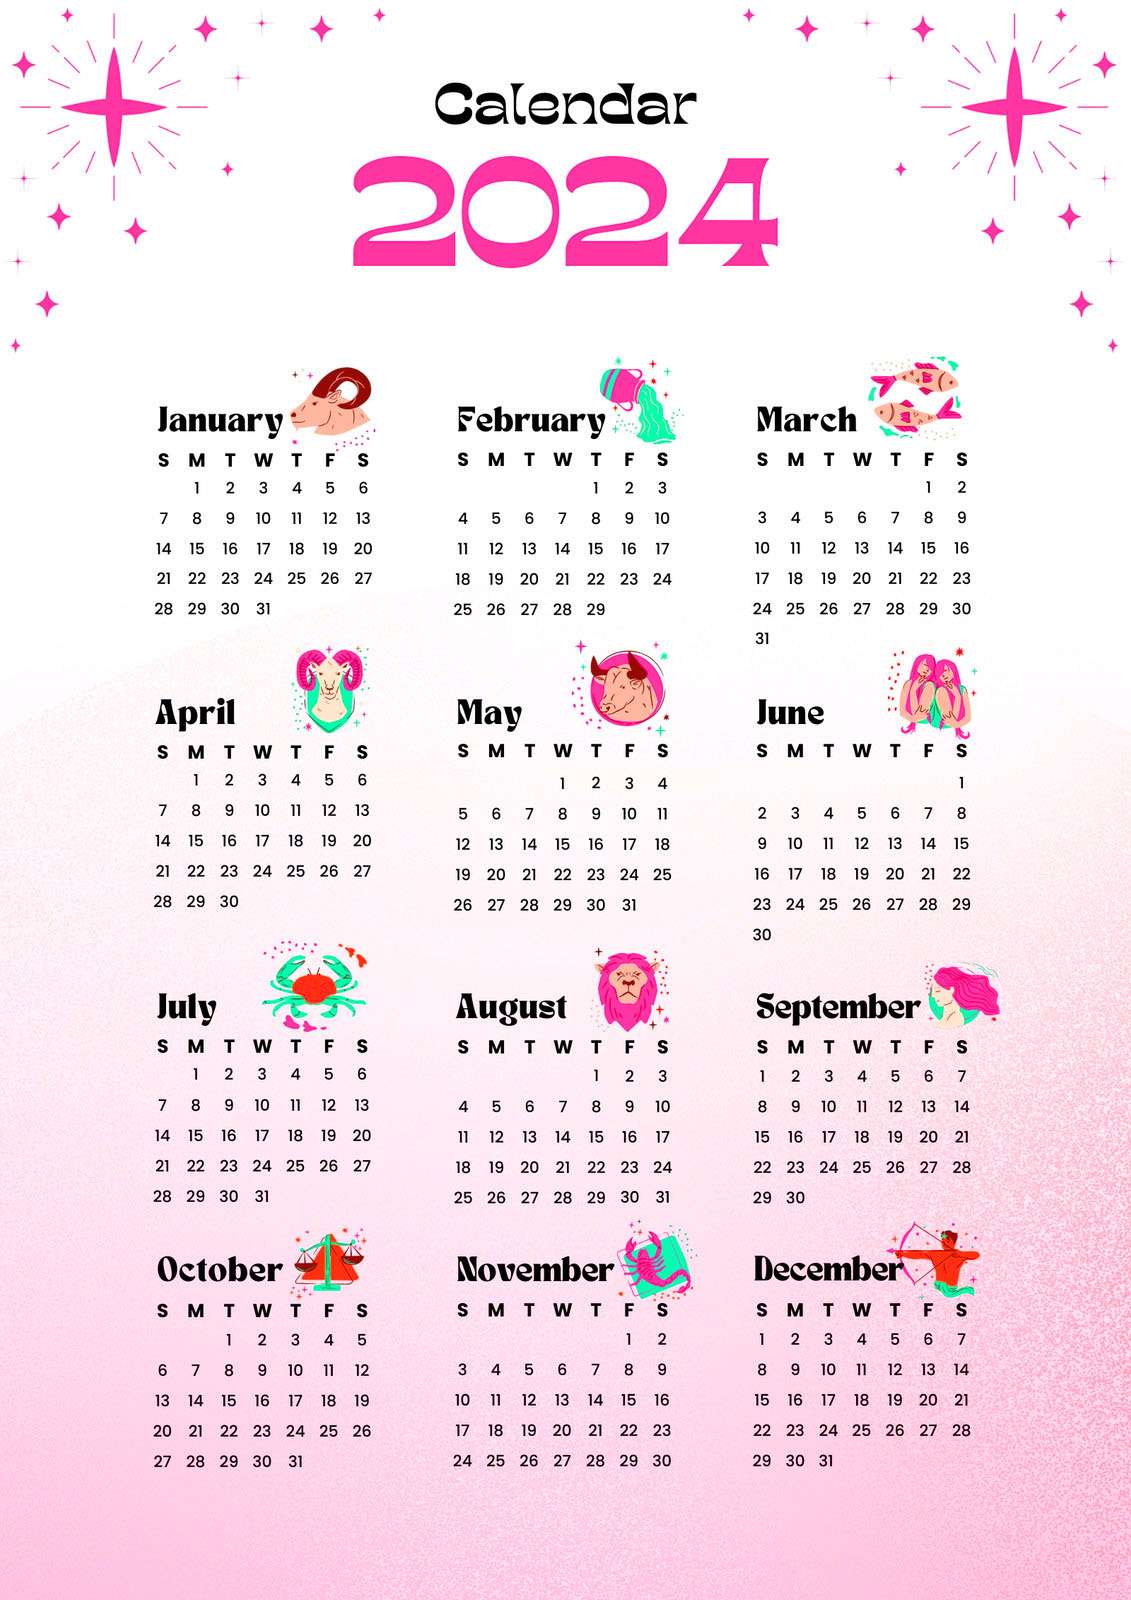 2024 Calendar Planned Days